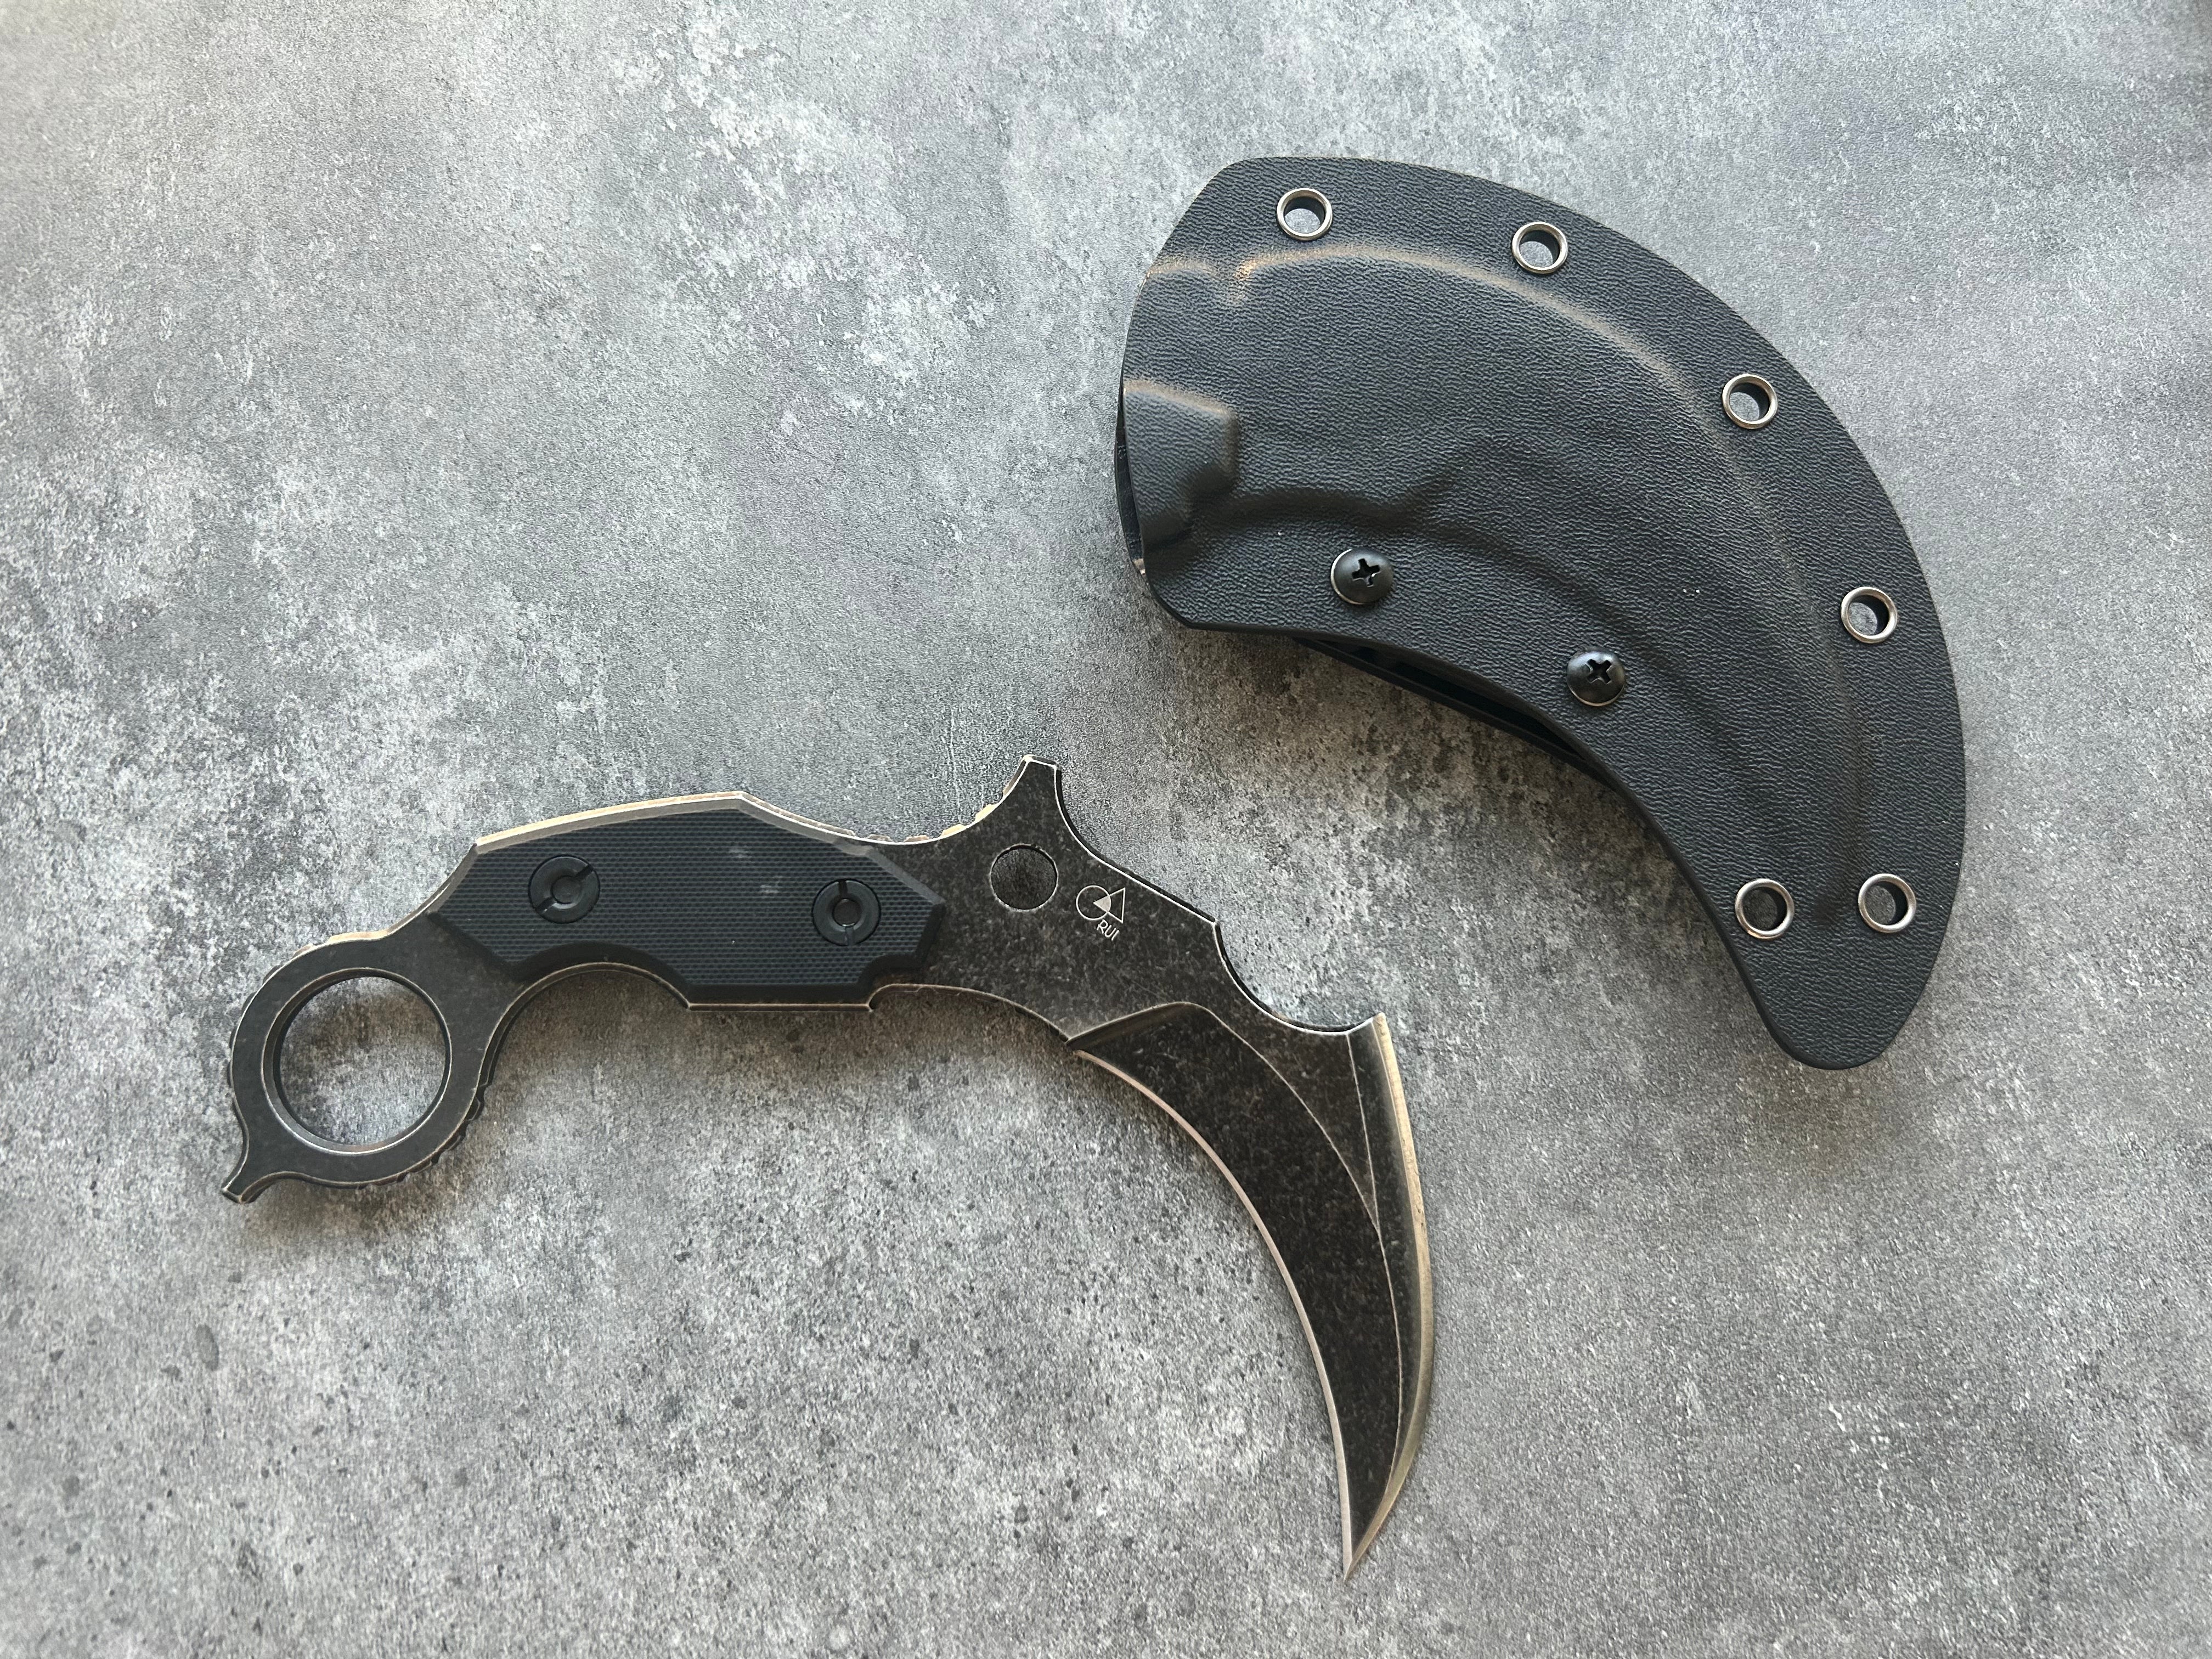 KARAM-Eagle Outdoor Survival Knife FREE SHIPPING